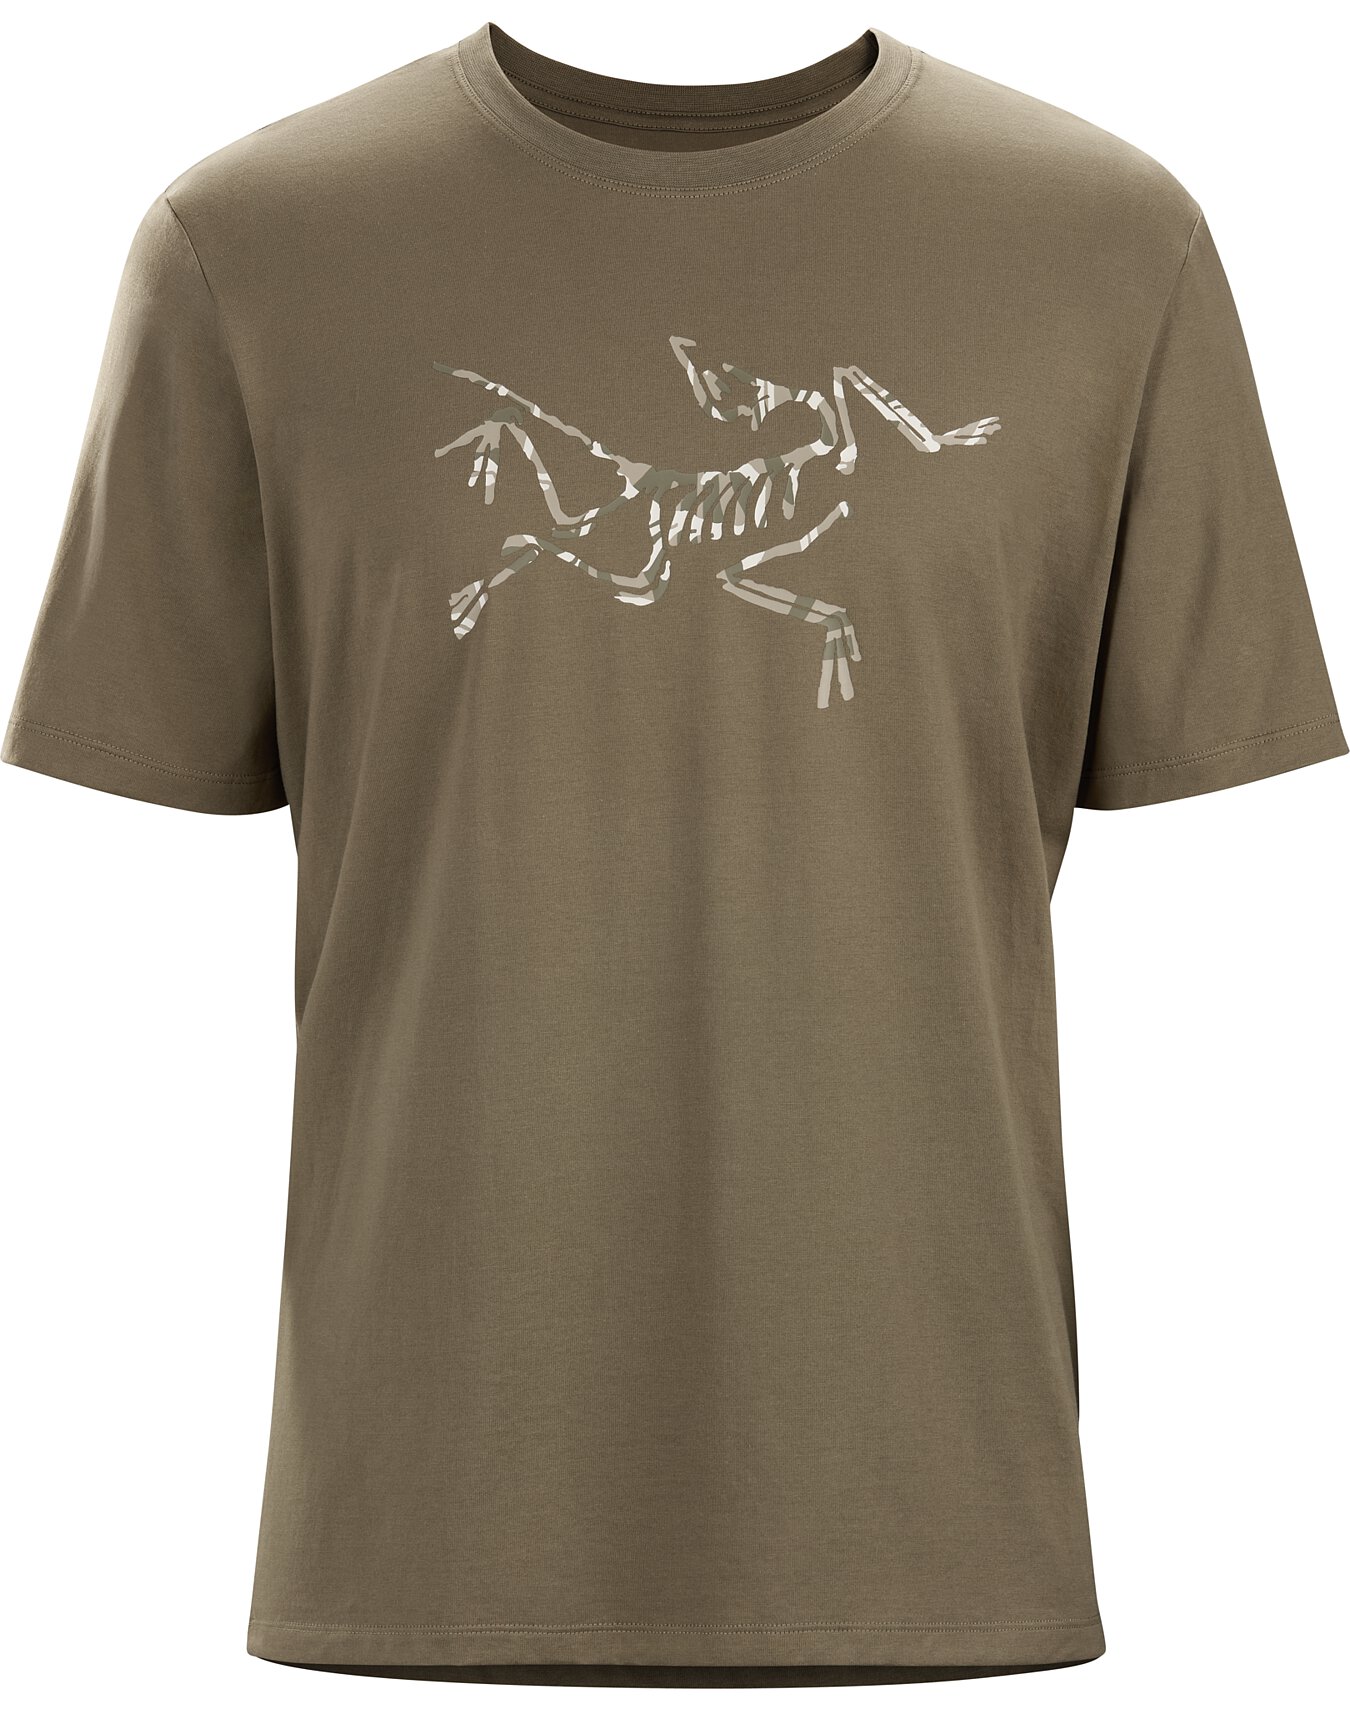 ARC-PAT T-Shirt Men's | Arc'teryx LEAF